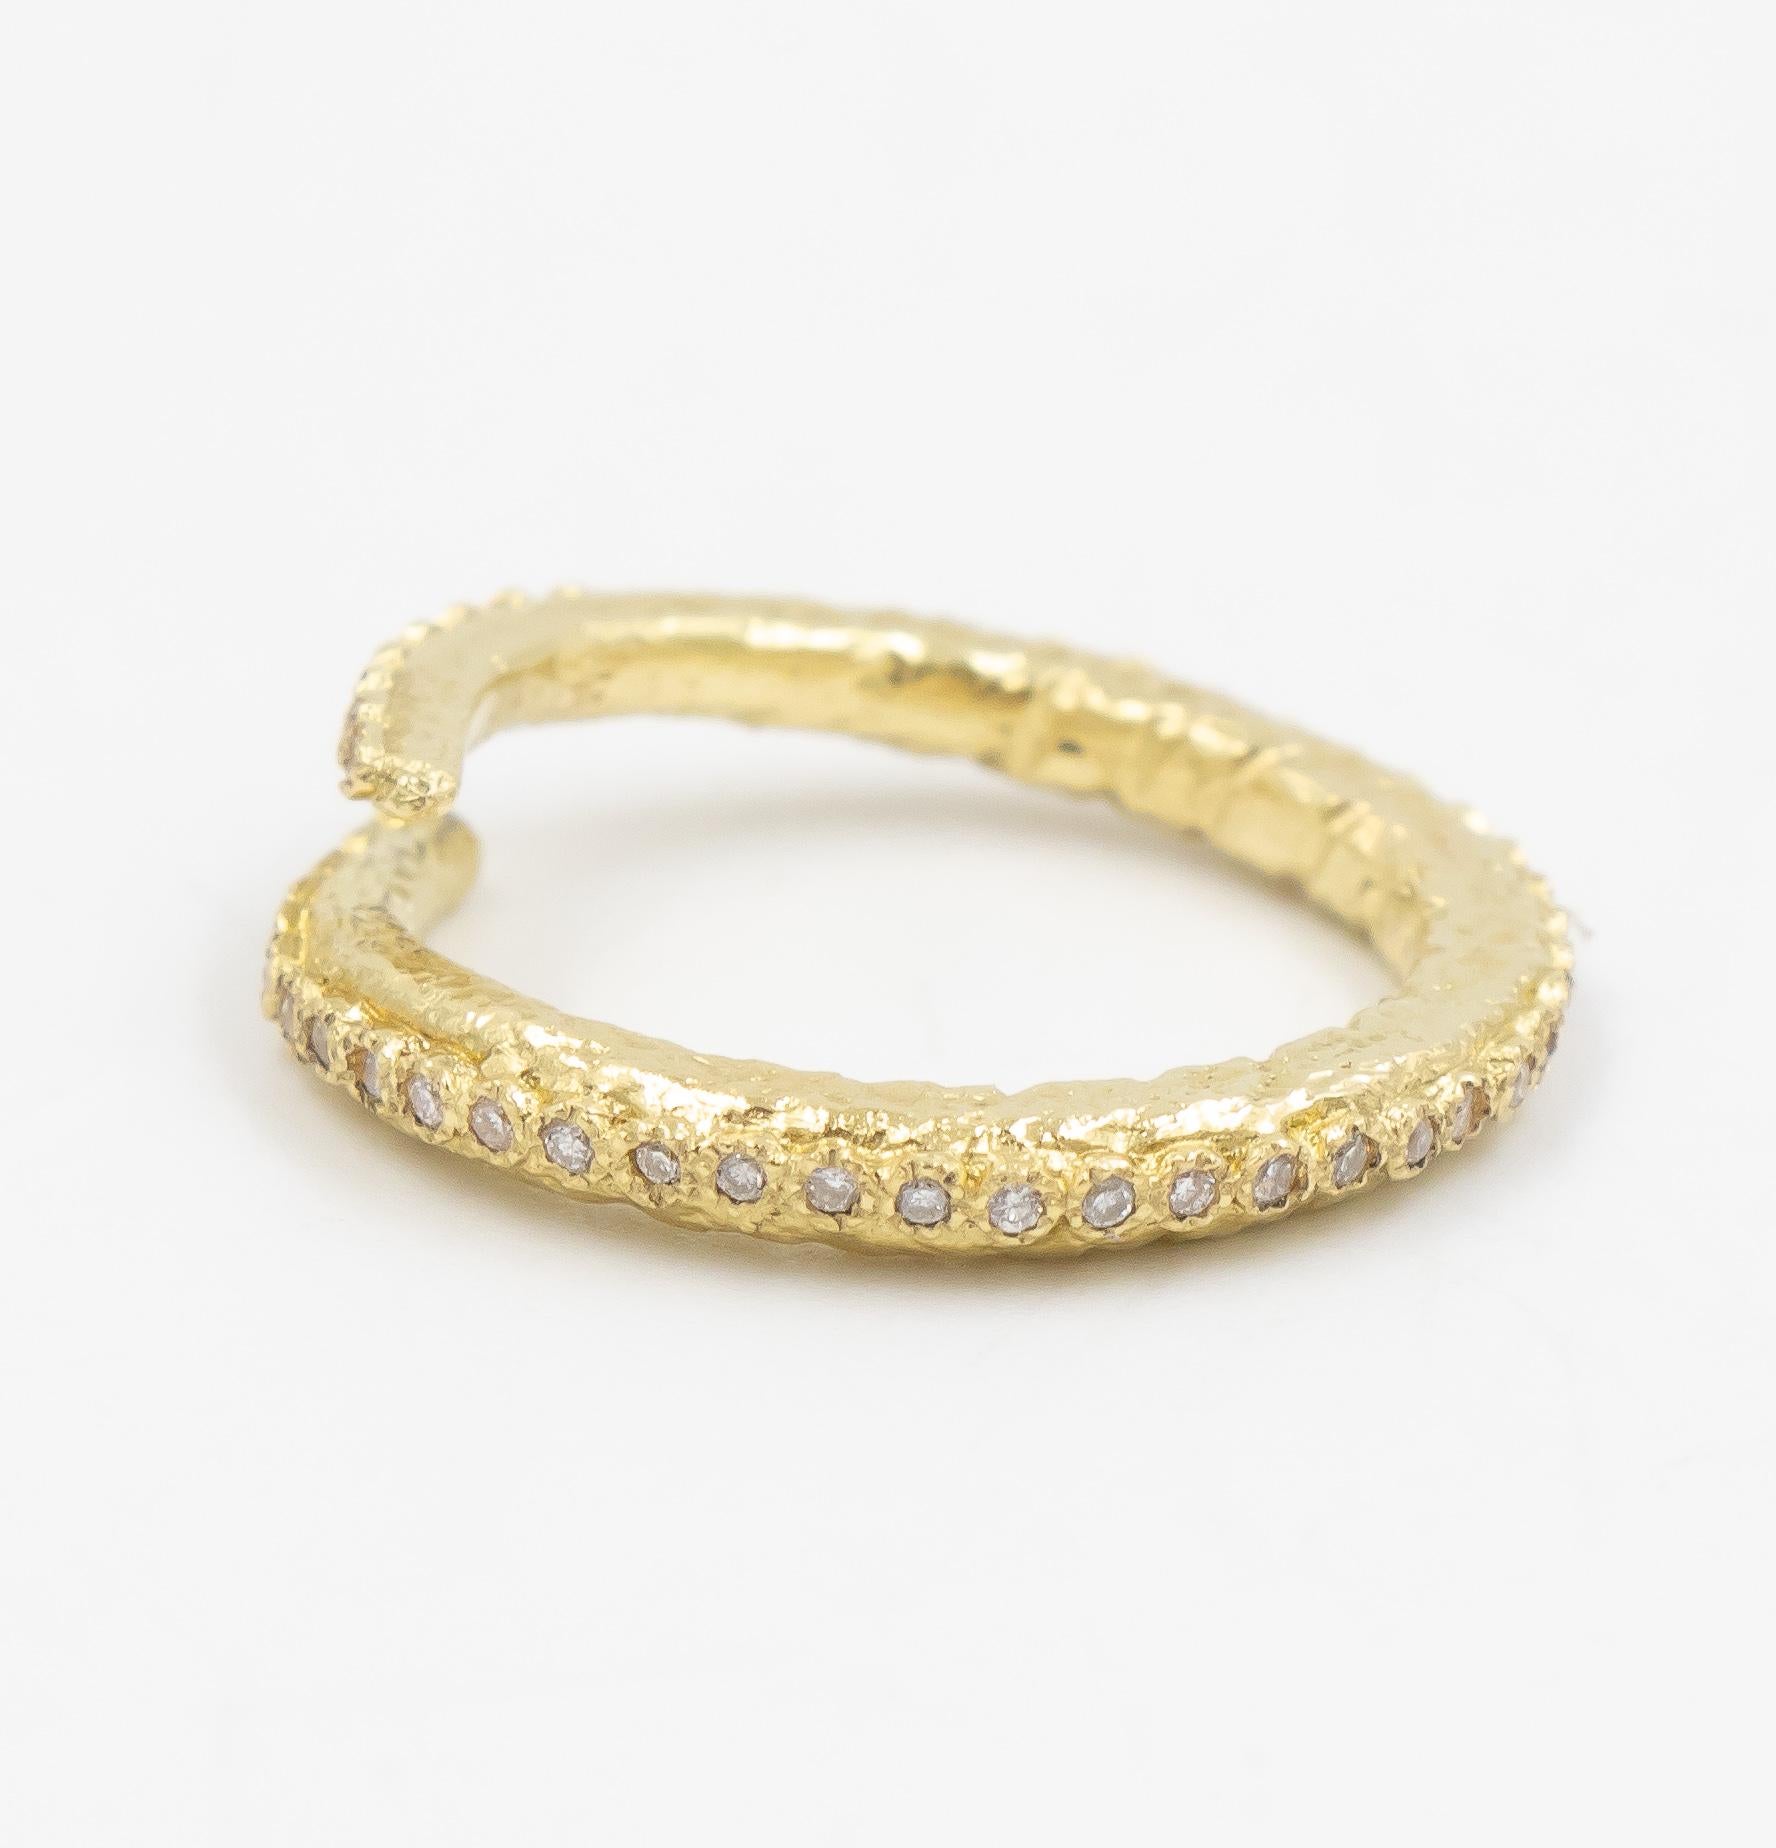 Renaissance Revival Armenta Old World Criss-Cross Diamond Ring, 18 Karat Yellow Gold, Style 09662